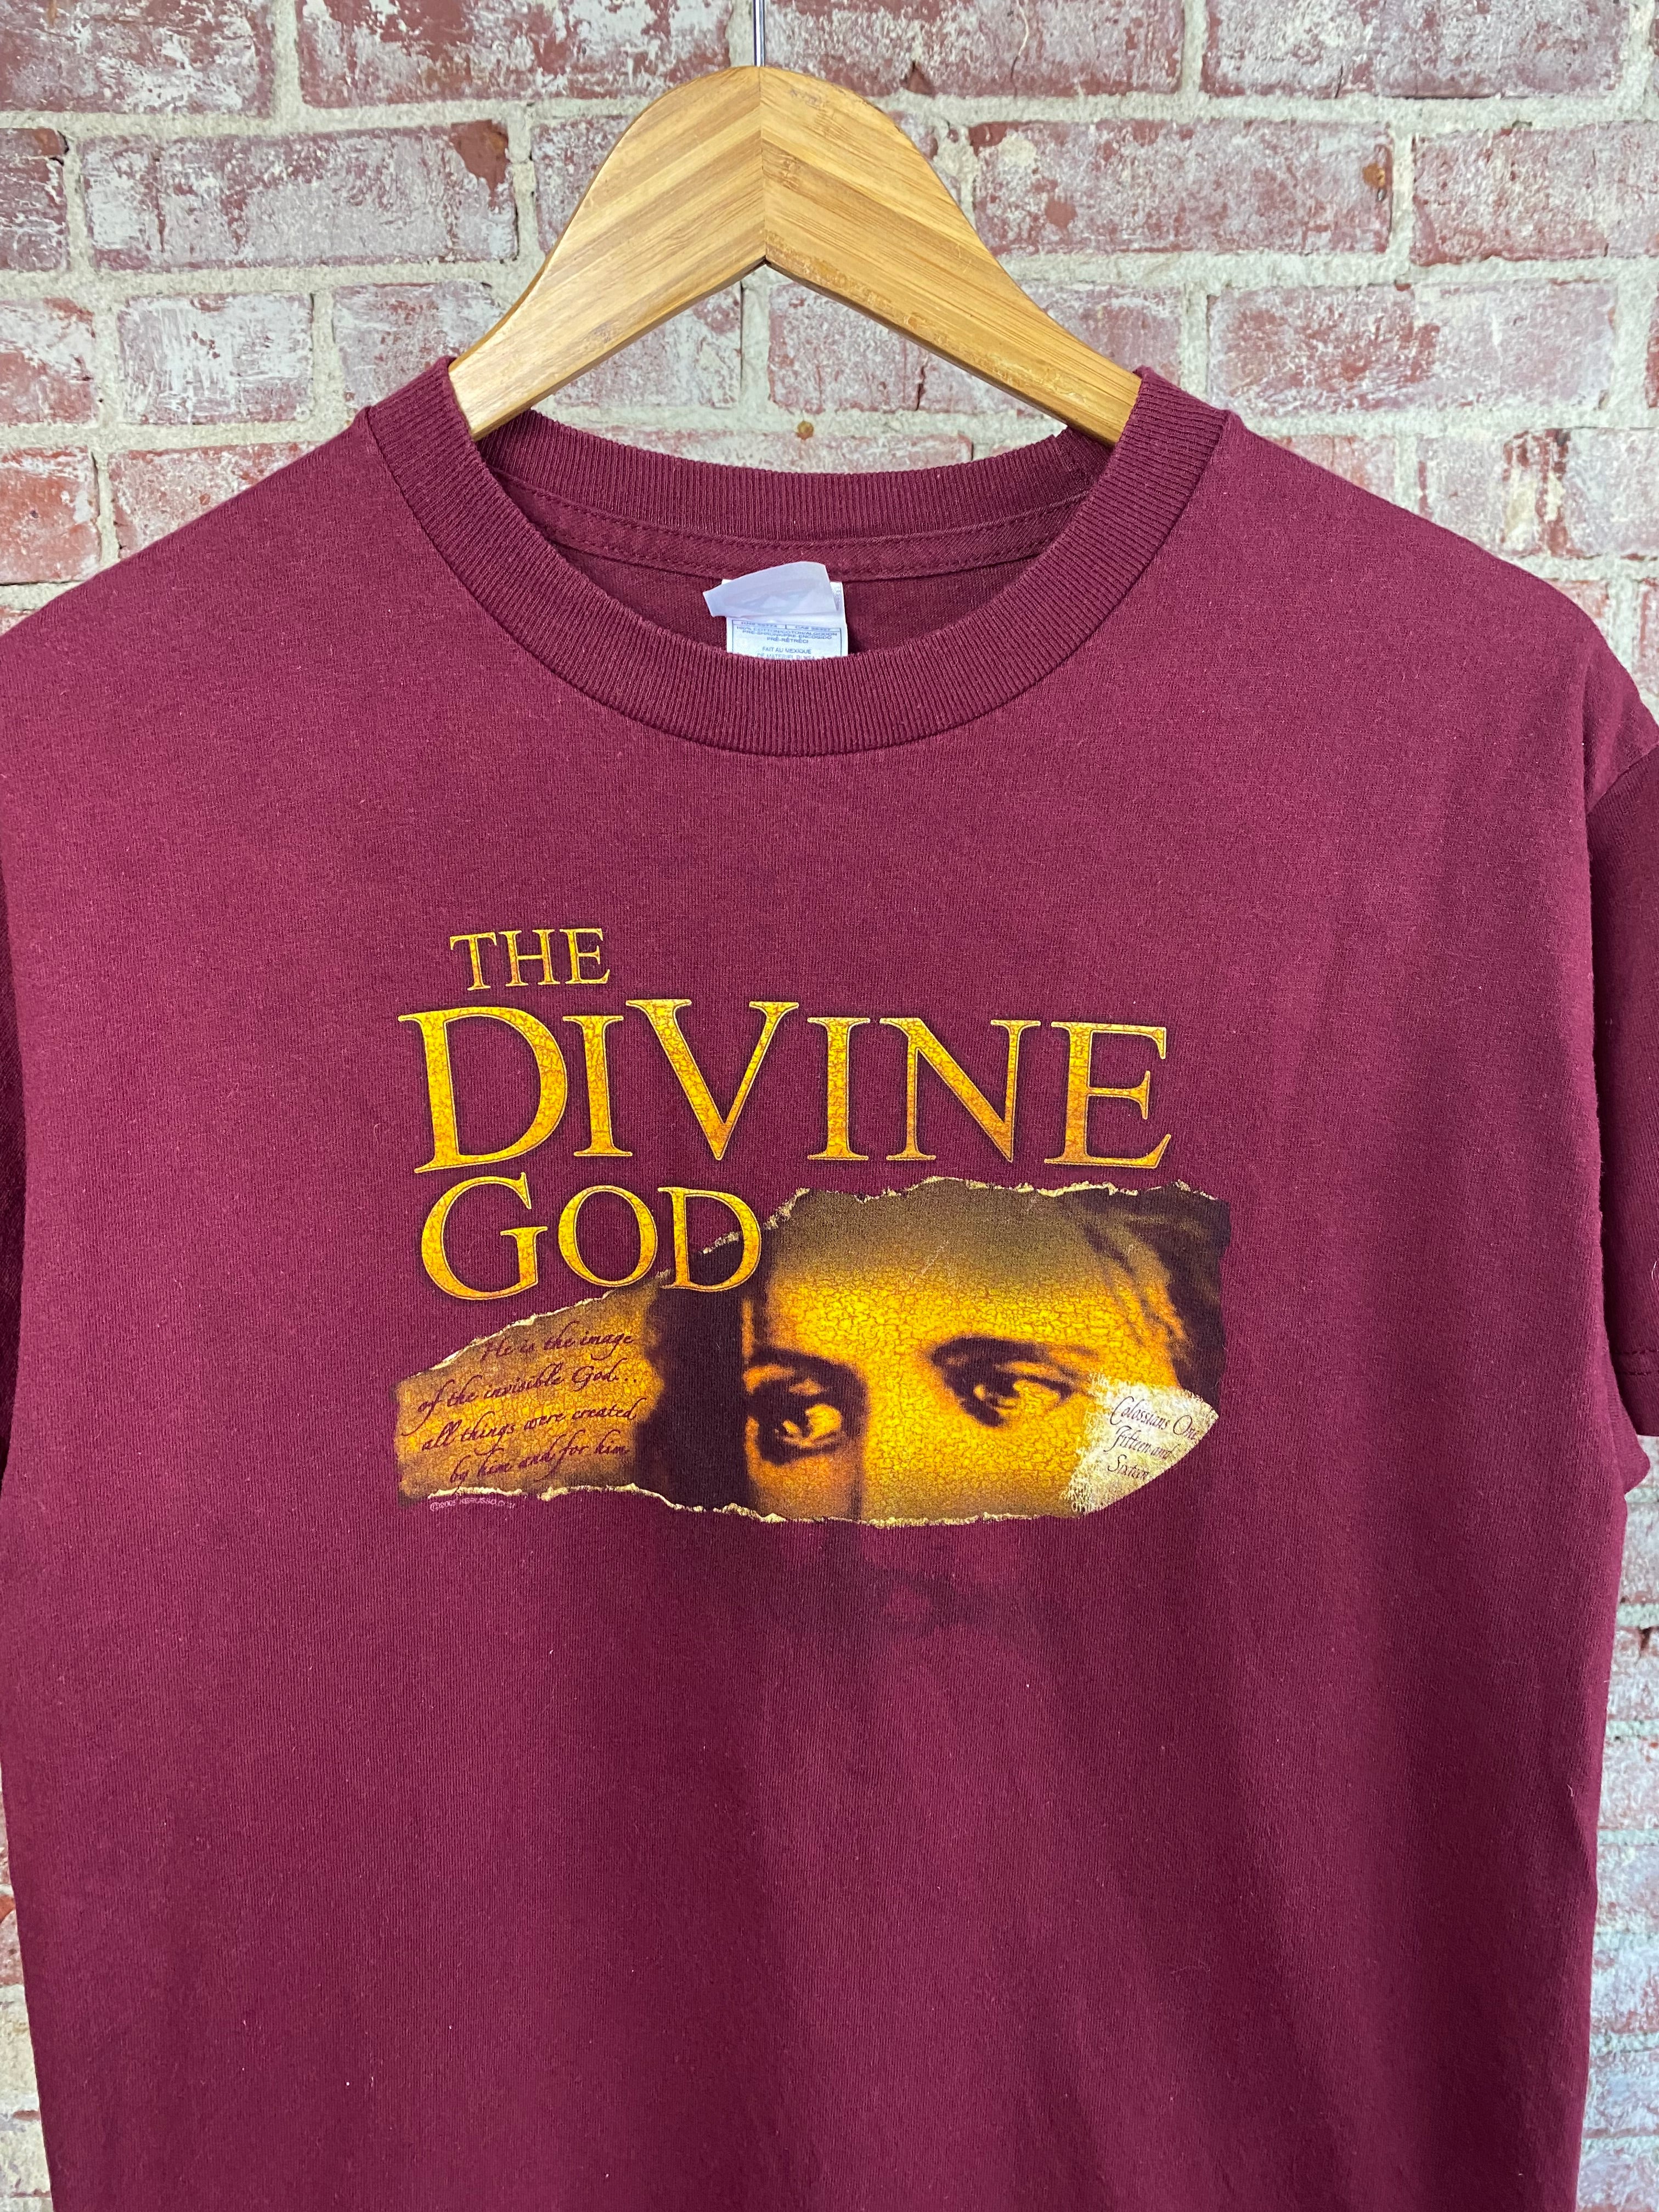 Vintage The Divine God tee